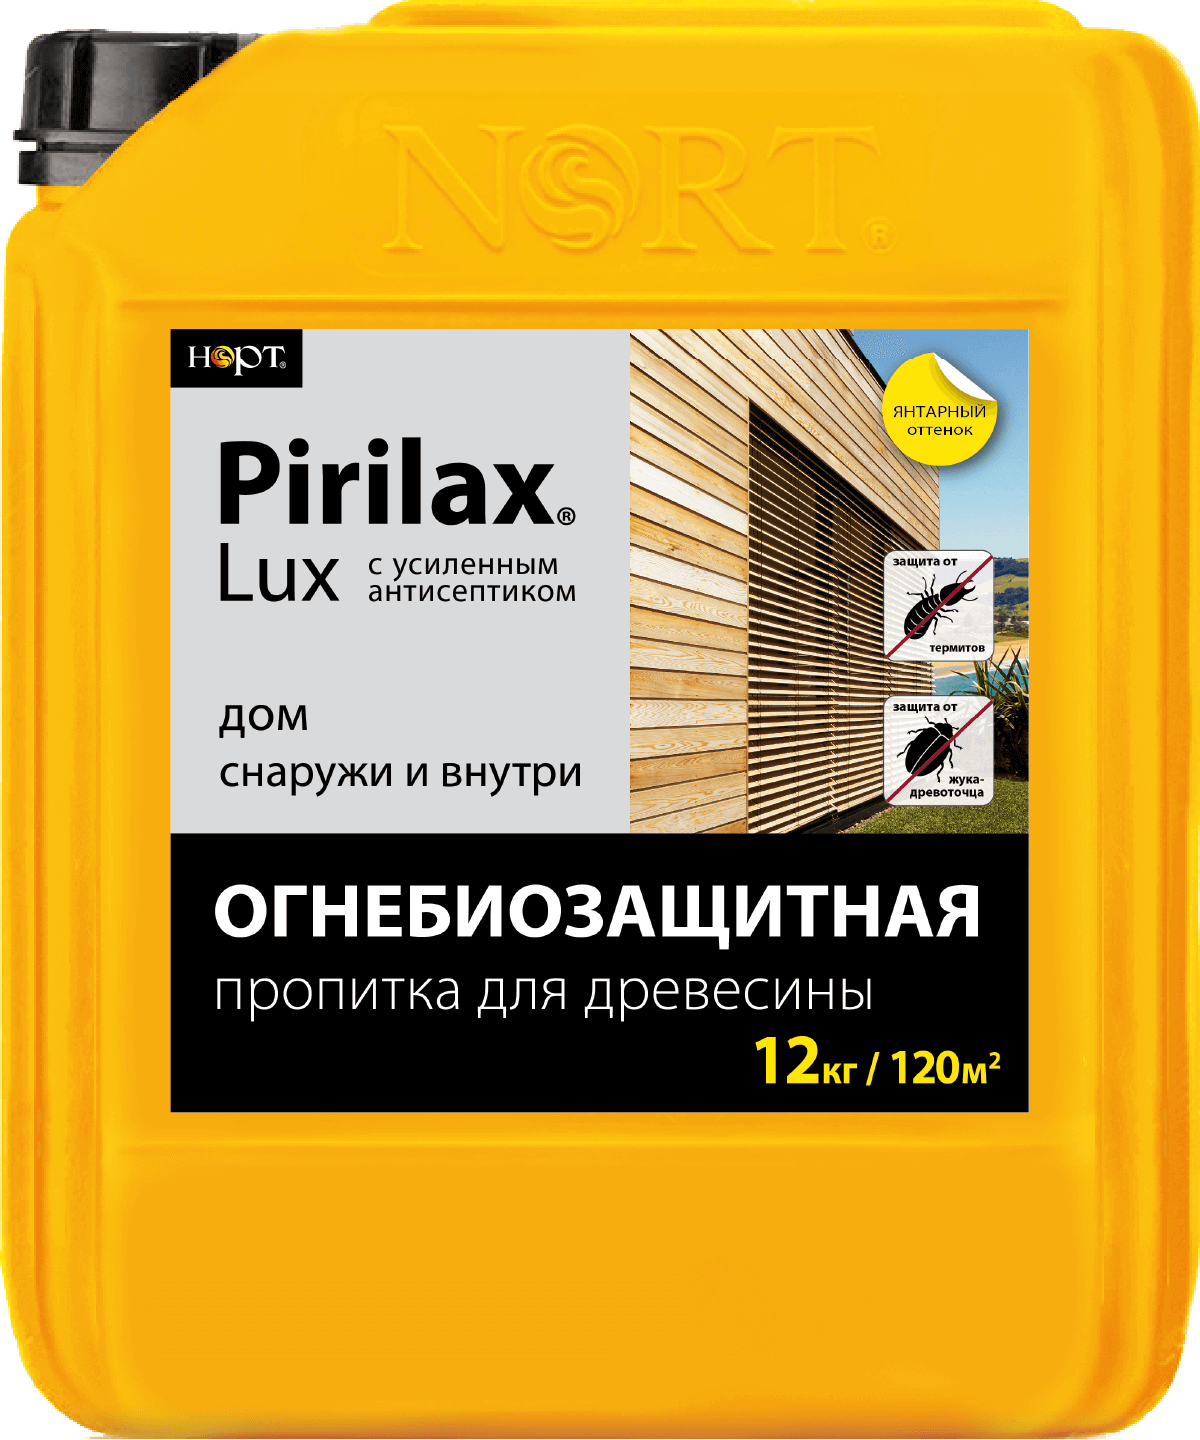 Пропитка огнебиозащита Пирилакс Pirilax lux люкс усиленная 12 кг